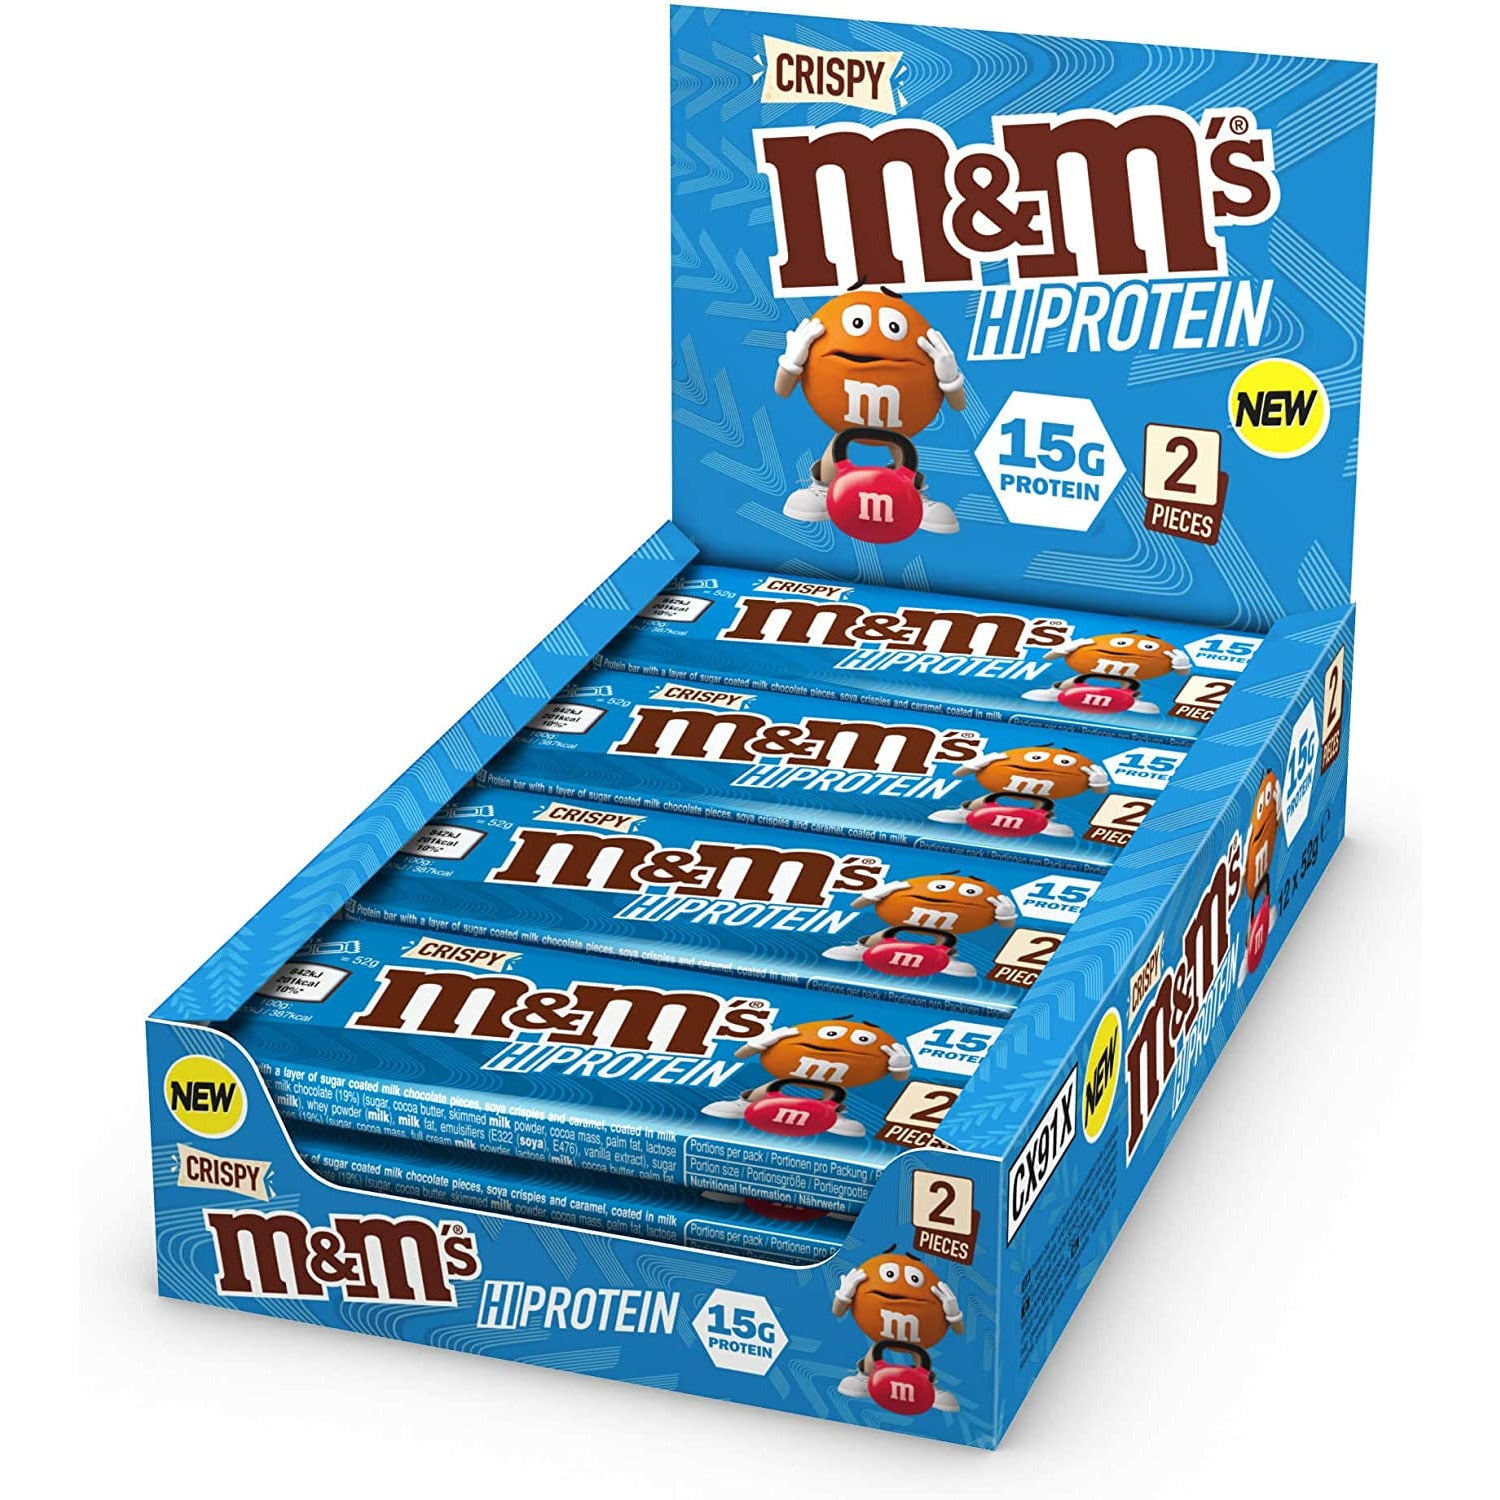 M&M's Hi-Protein Chocolate Bar (1 box of 18 bars) protein snacks NEW Crispy (with mini Crispy M&M's) BOX of 12 BEST BY MAR/2023 Mars